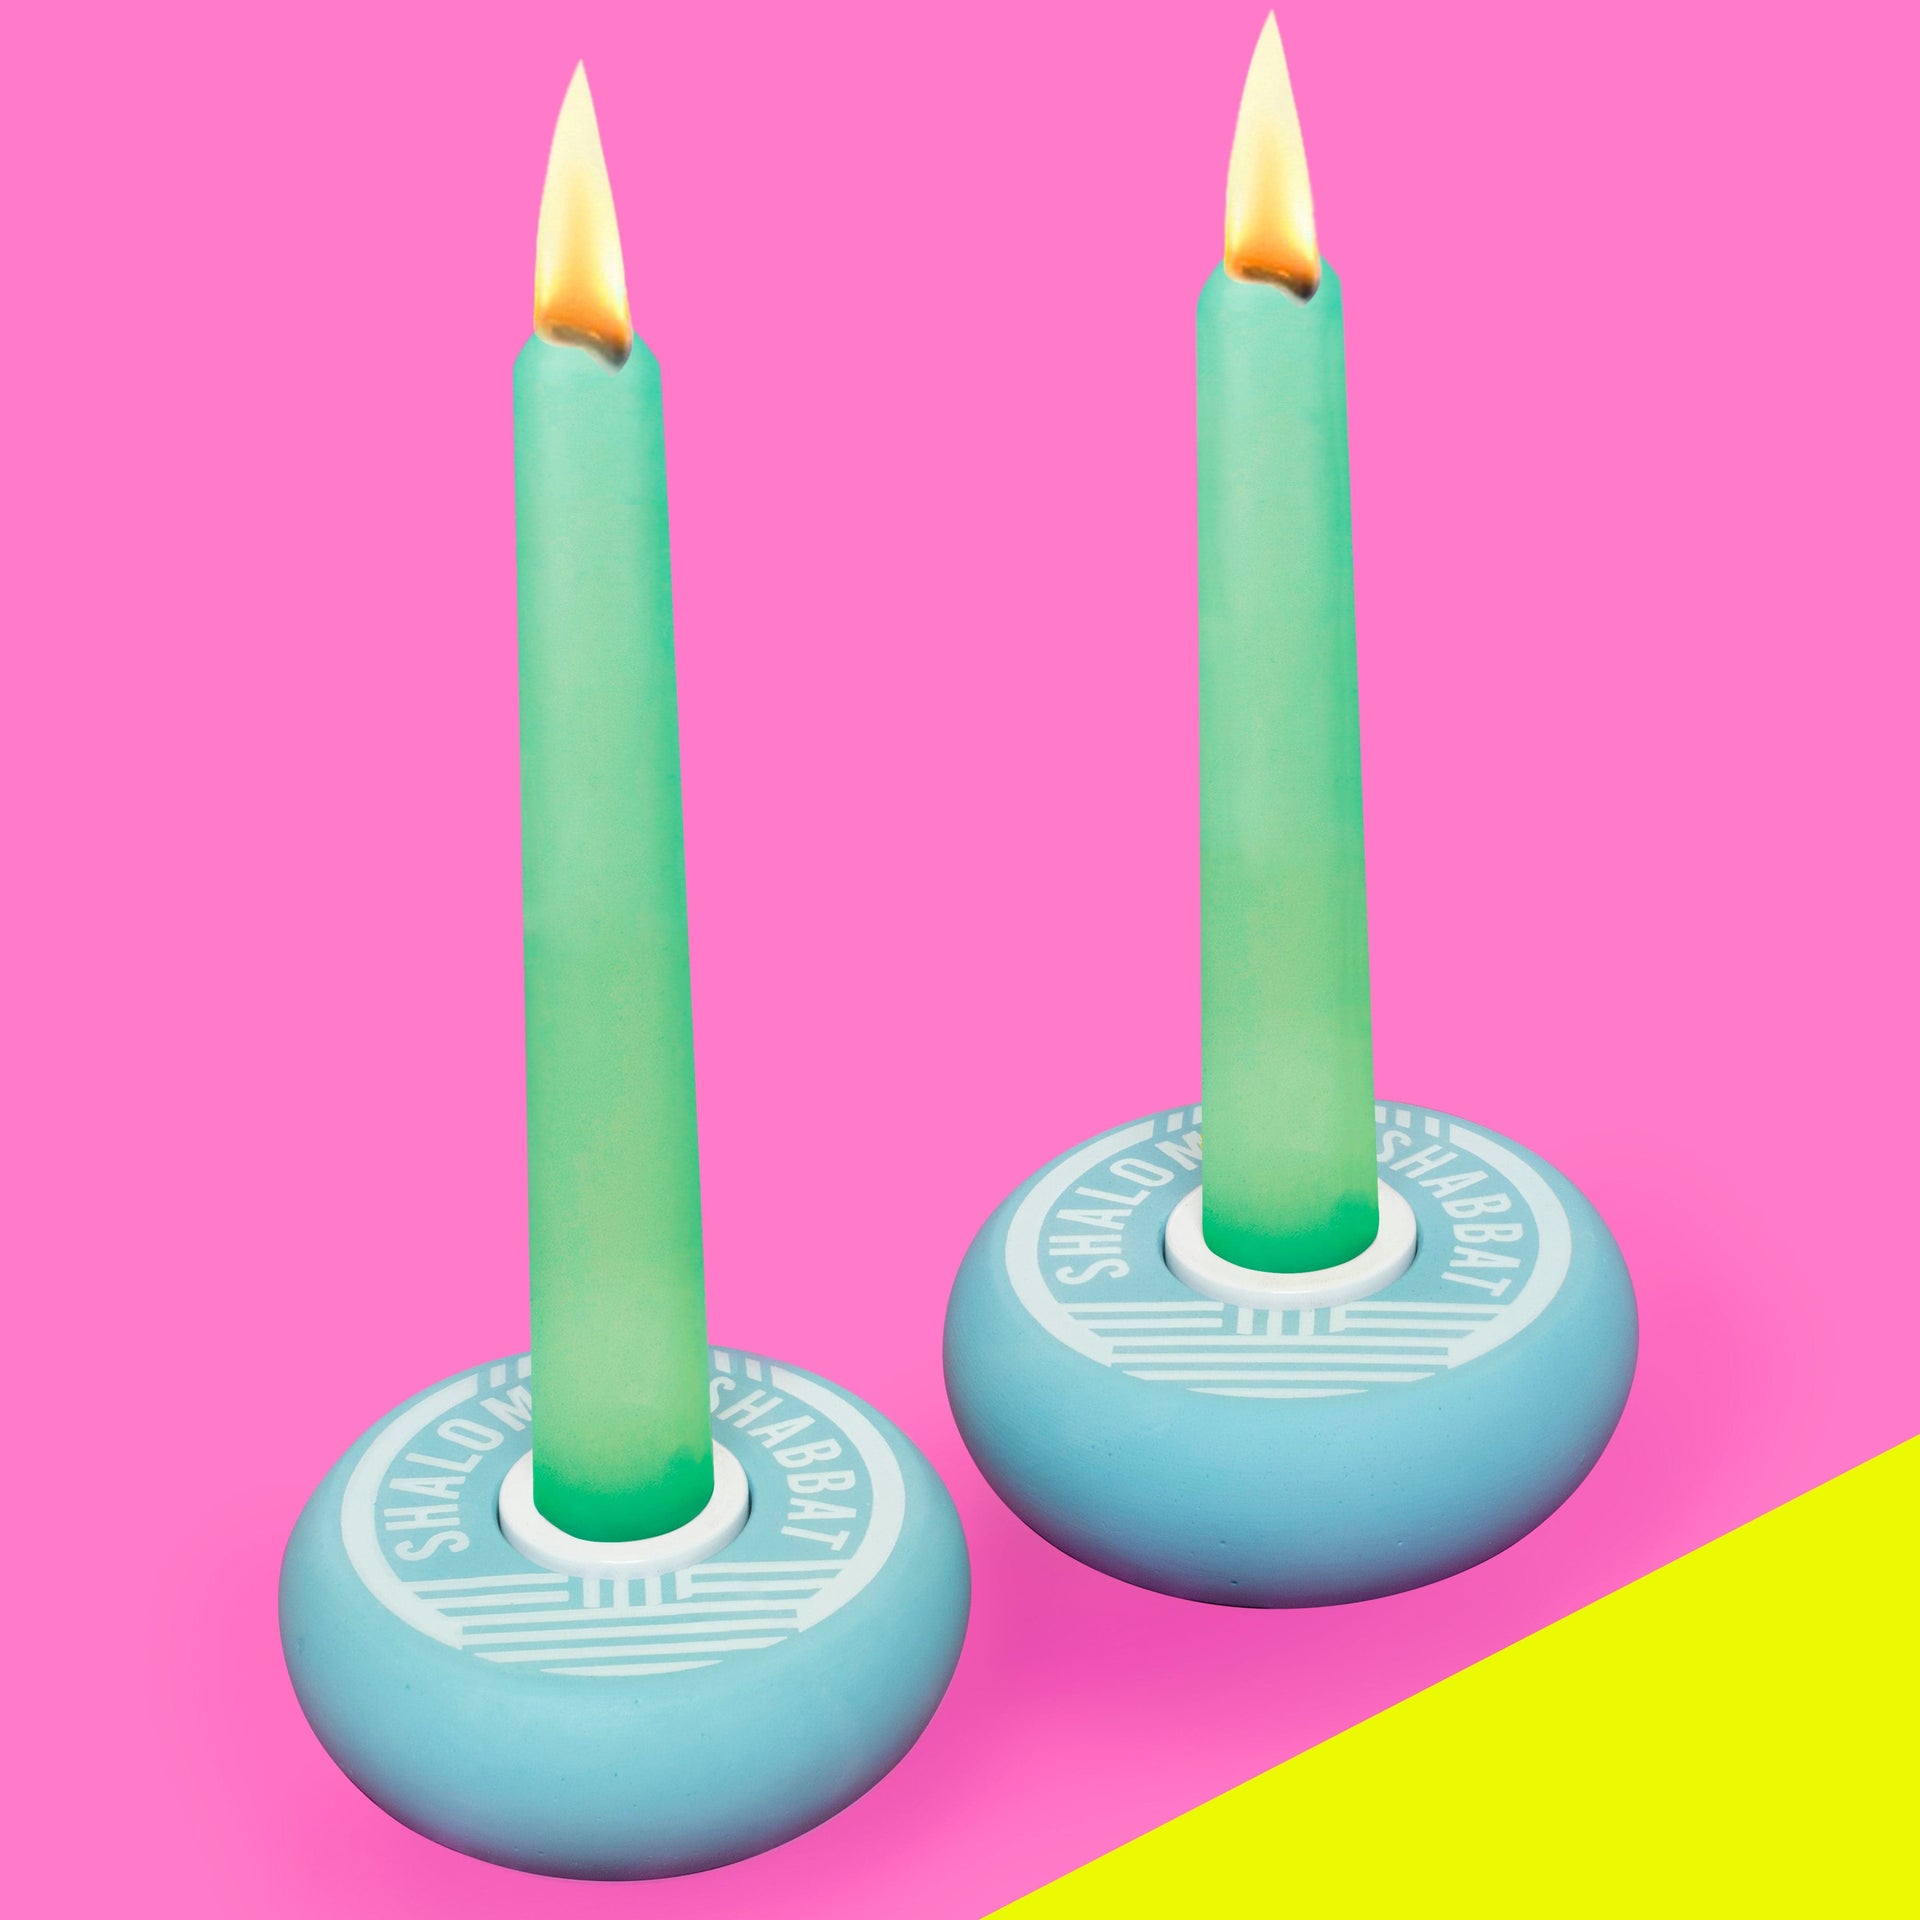 Chai Modern Candlesticks Shabbat Shalom Candy Candleholders - Blue and White